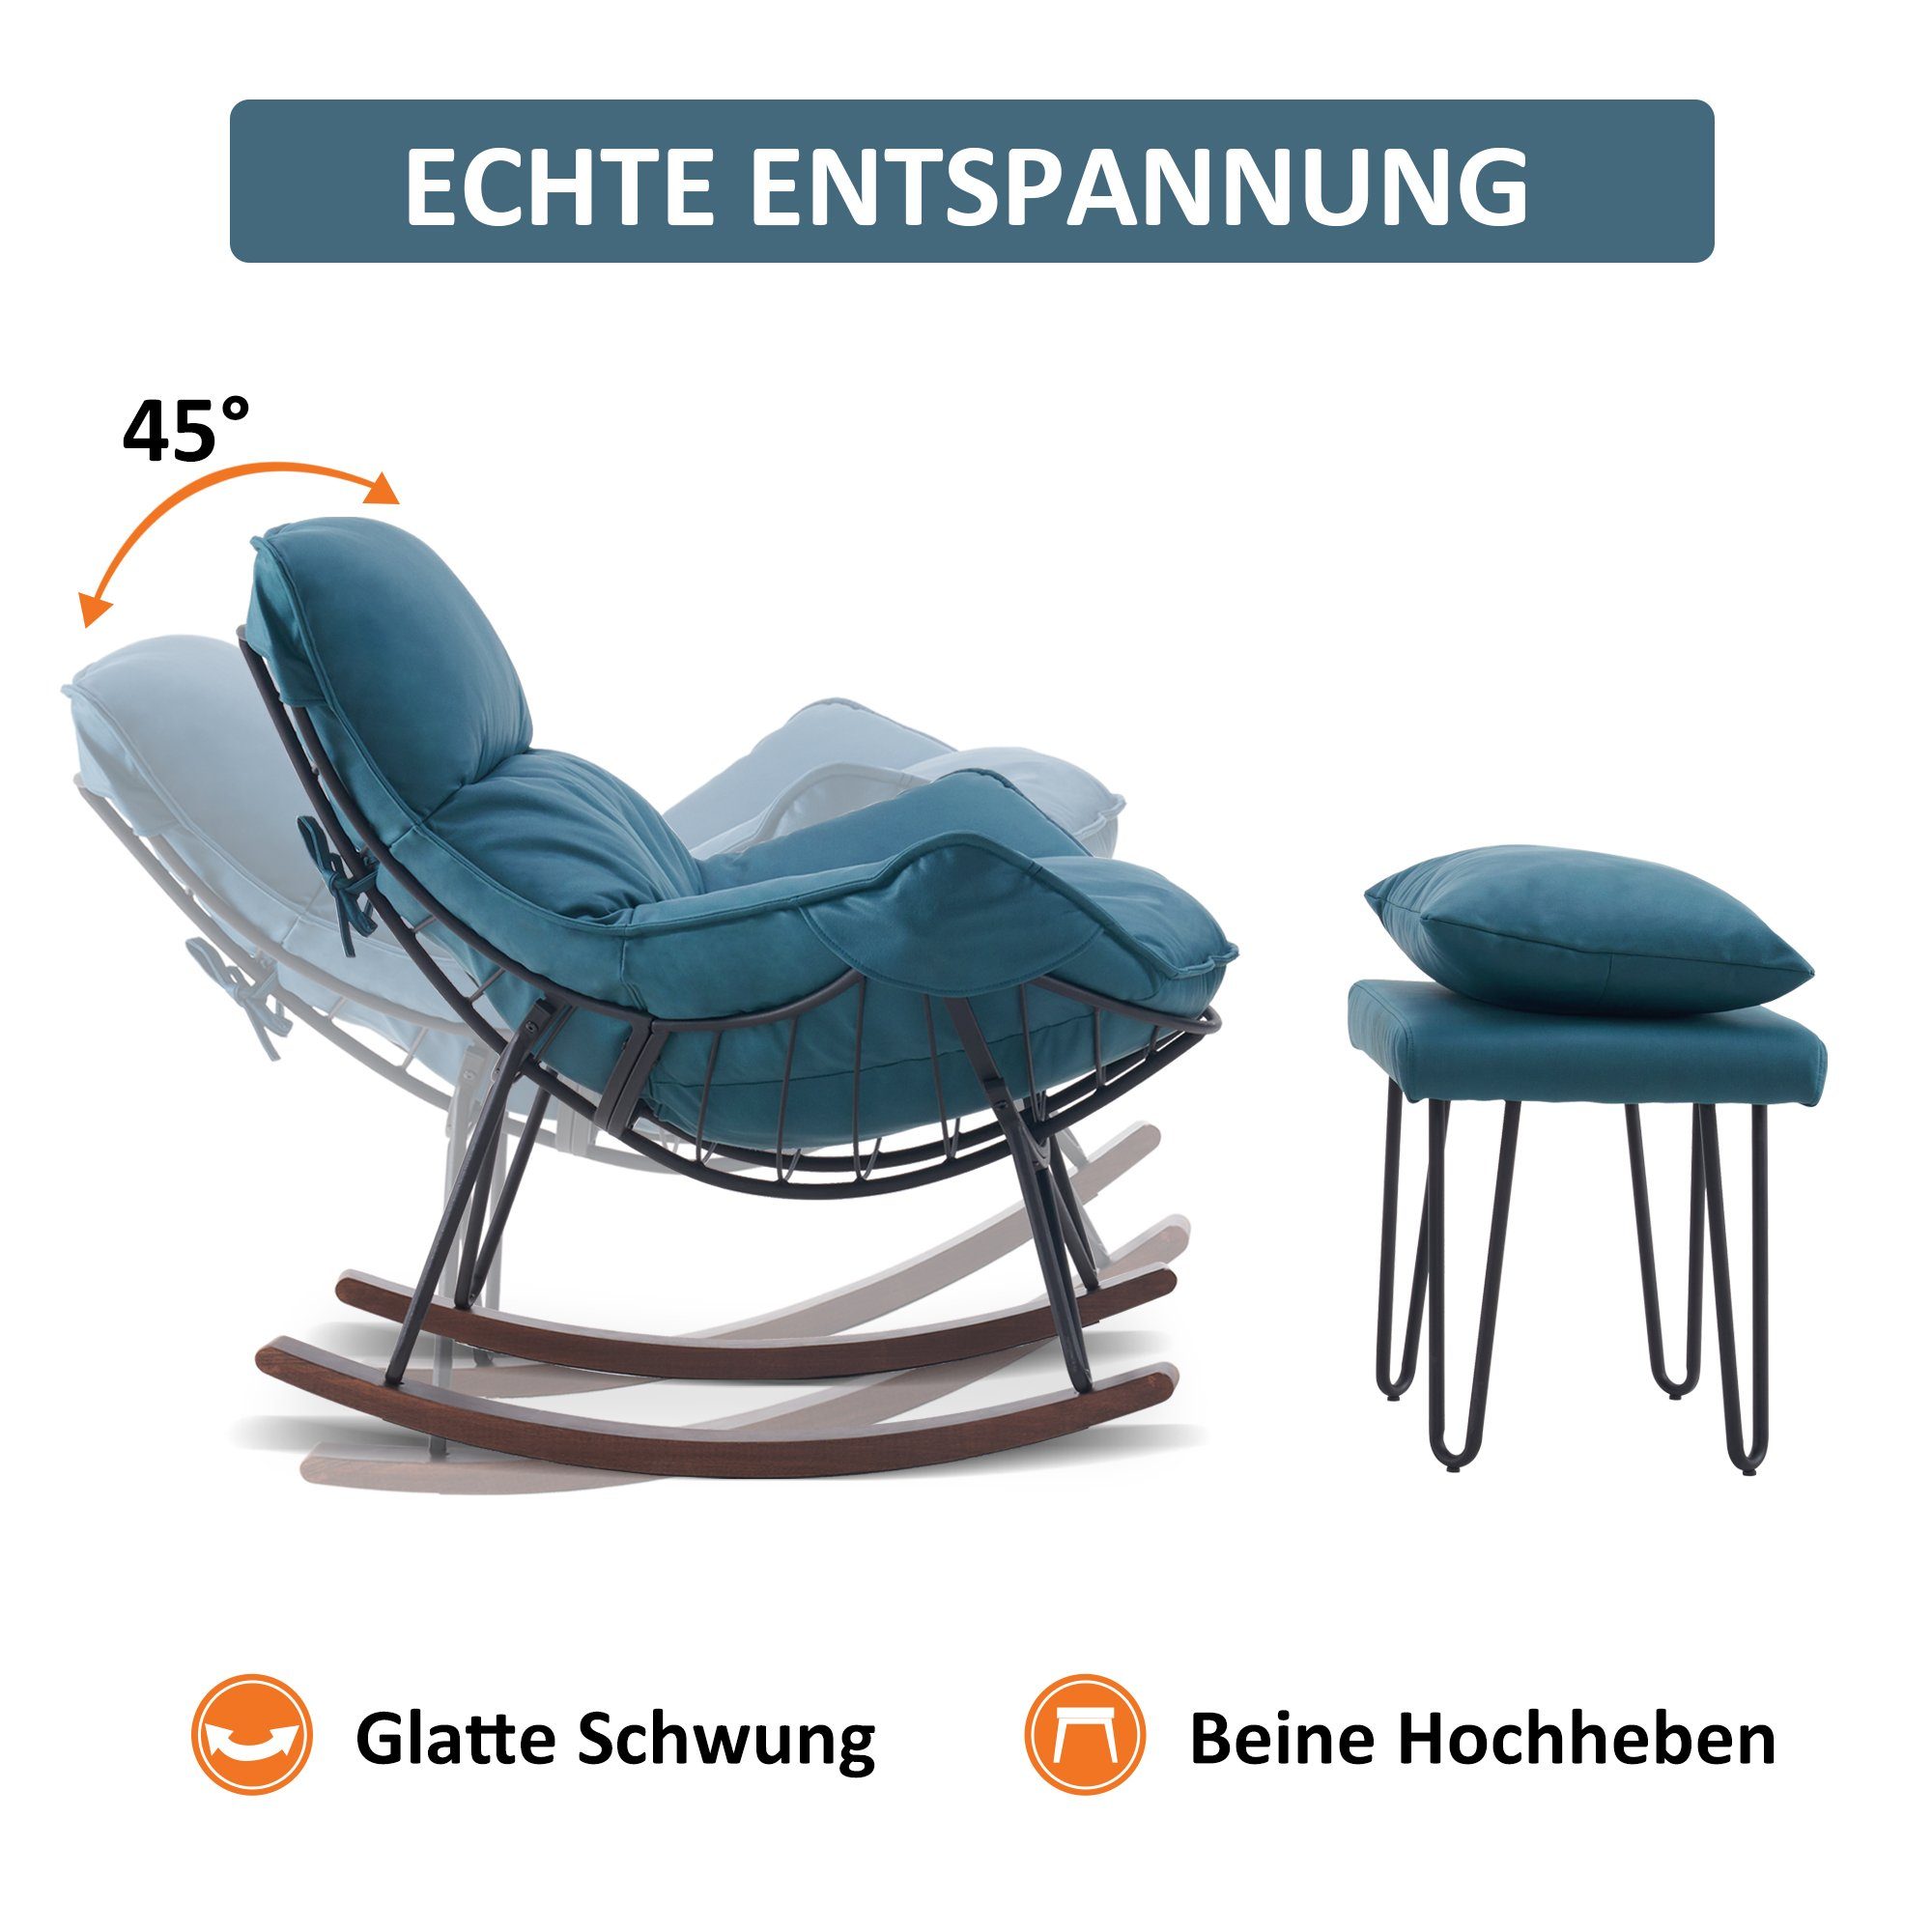 MCombo Schaukelstuhl M Sessel Hocker Blau 4118, Chair Swing mit MCombo Schaukelsessel mit Lesestuhl, Hocker, Schaukelsessel Stillsessel